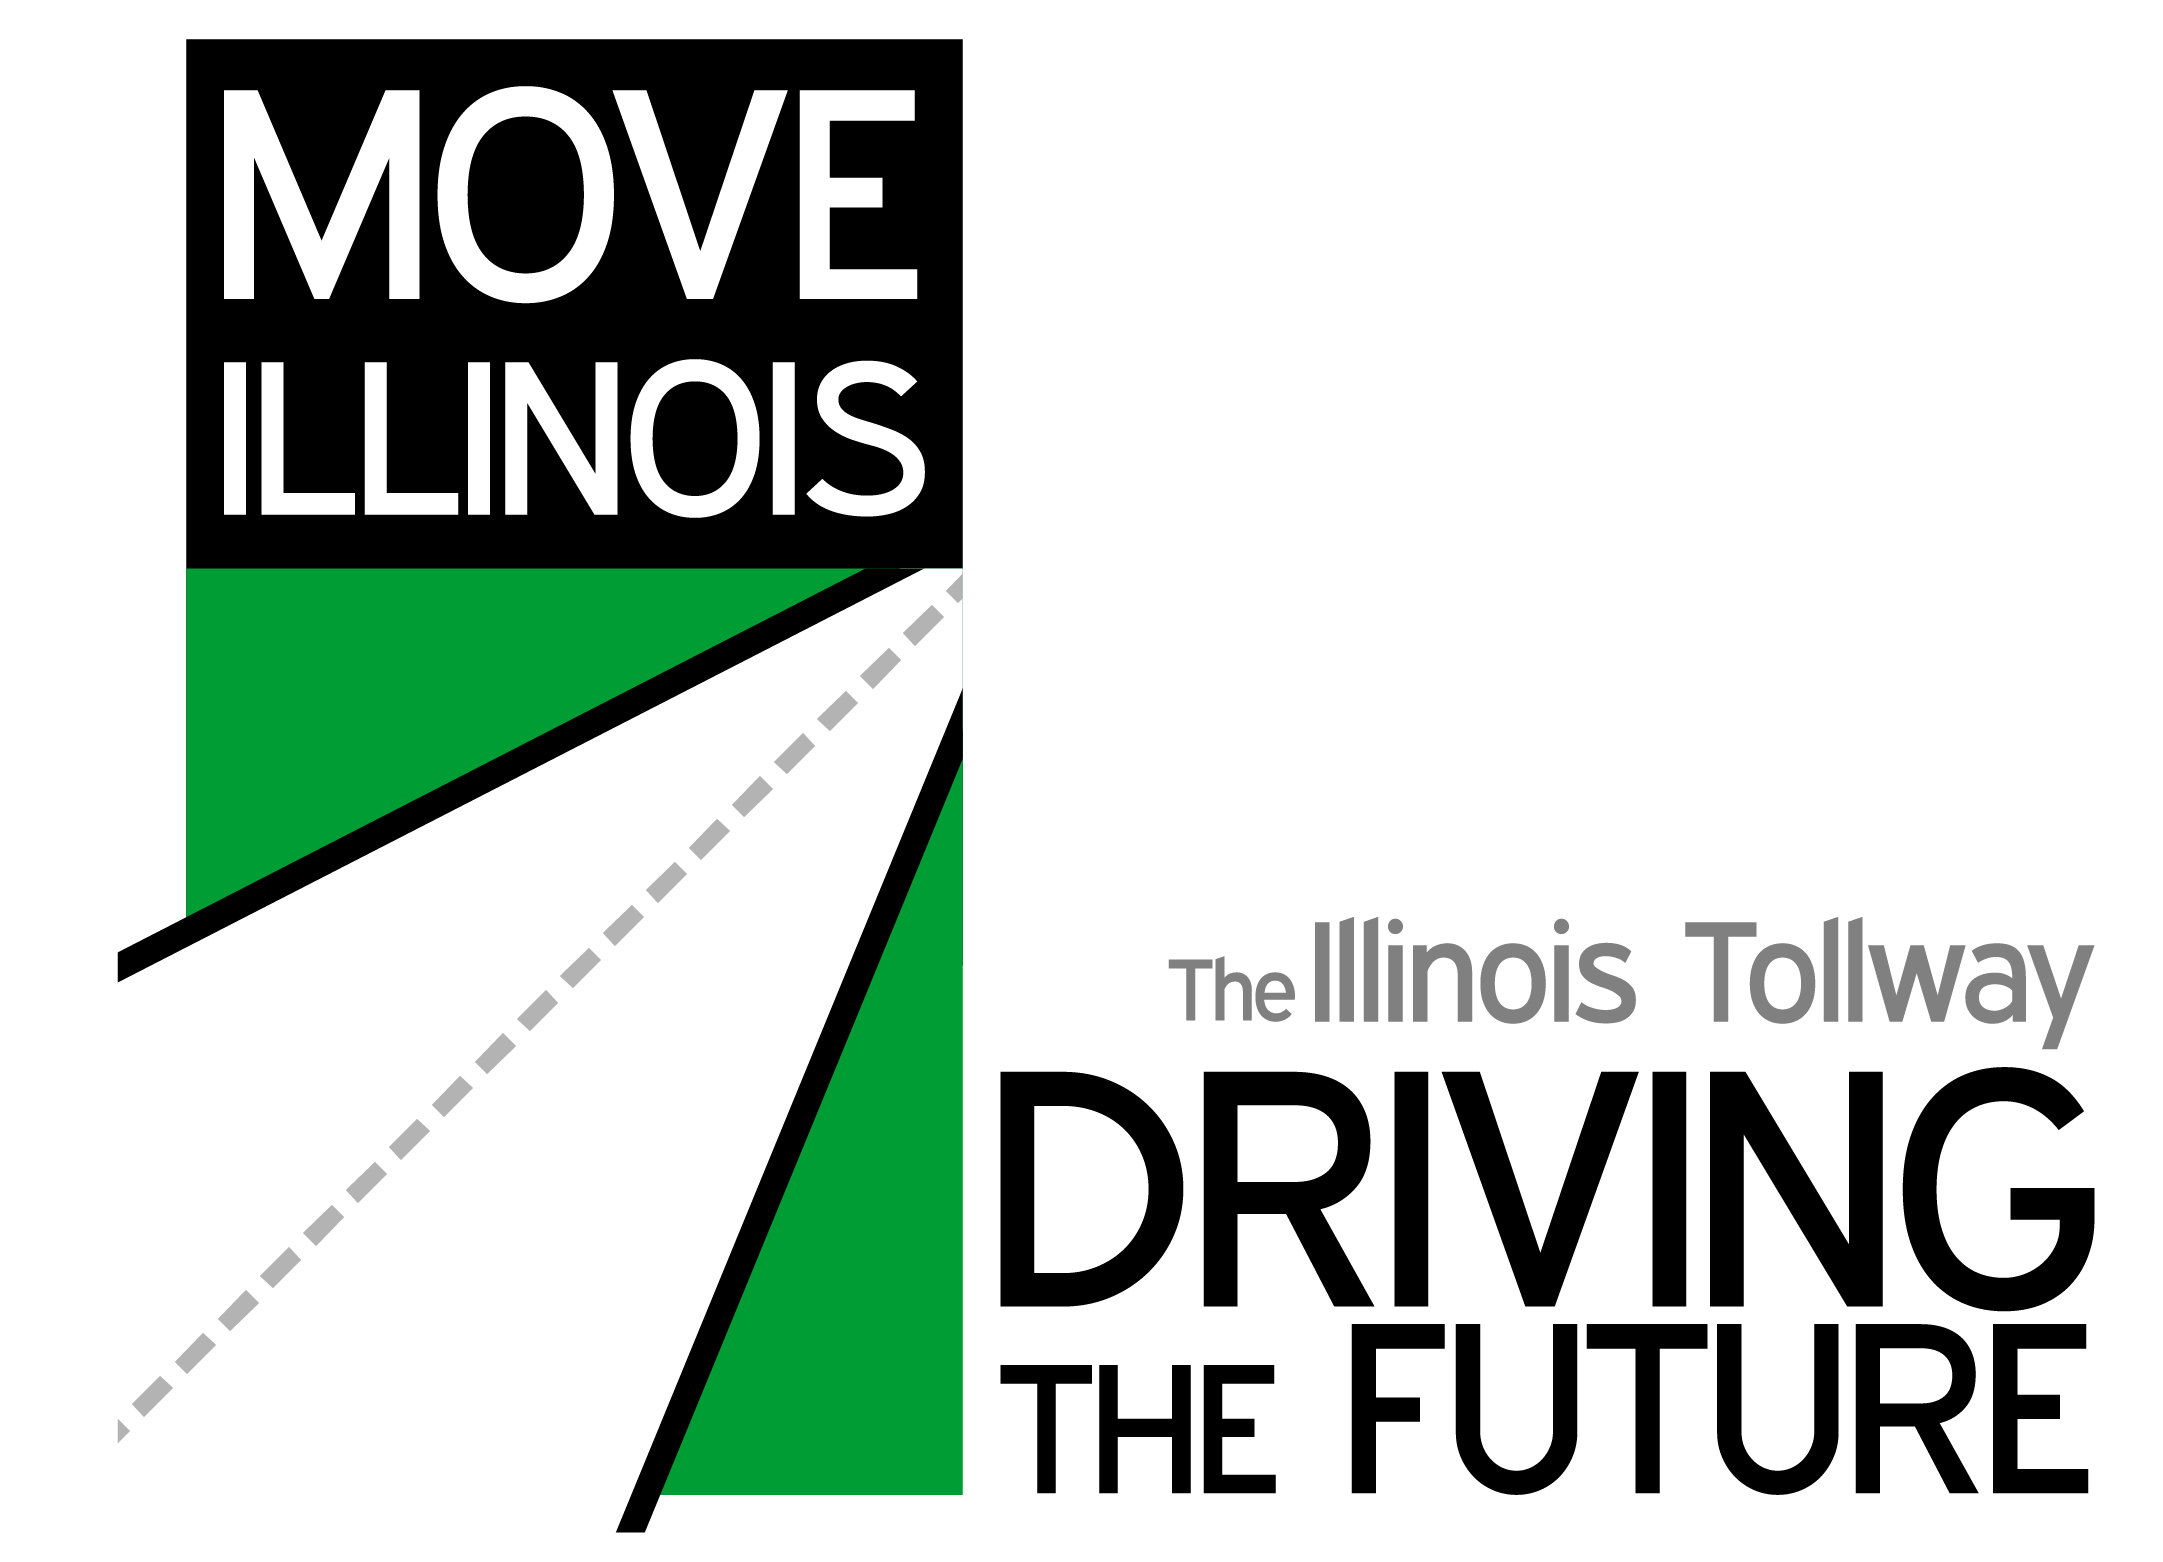 Move Illinois: The Illinois Tollway Driving the Future